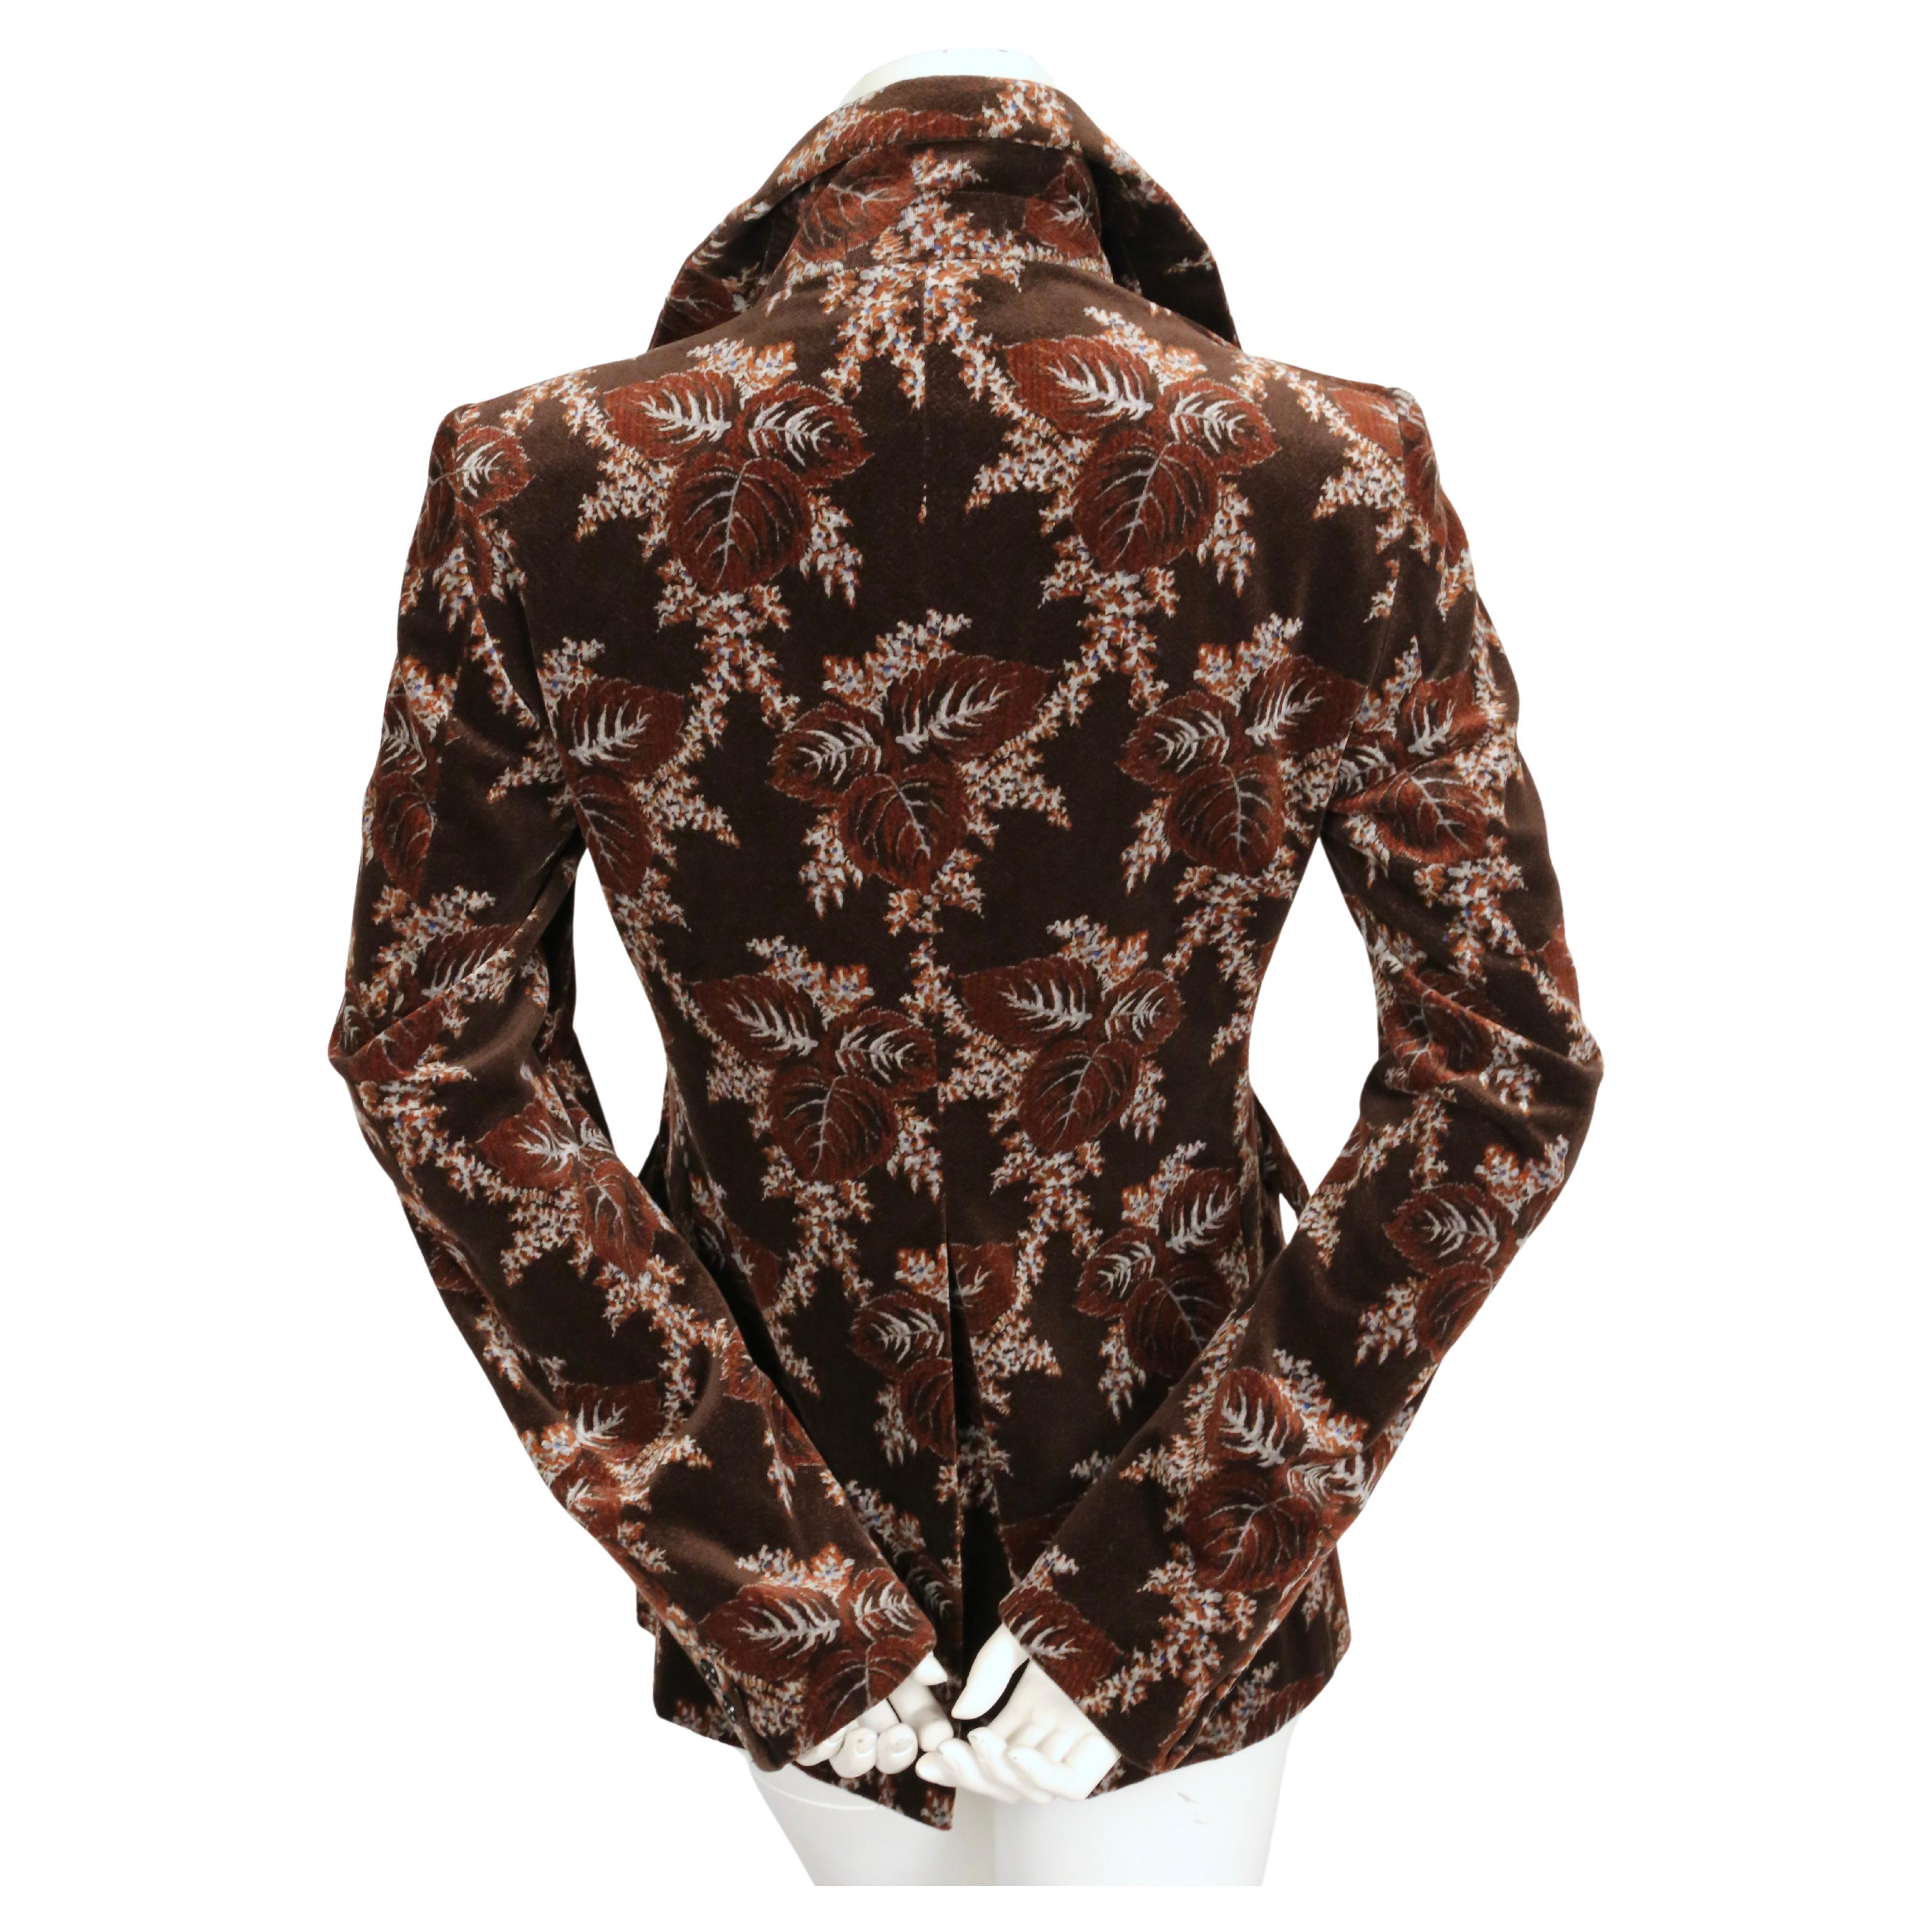 2001 COMME DES GARCONS floral velvet jacket with ruffled collar For Sale 2